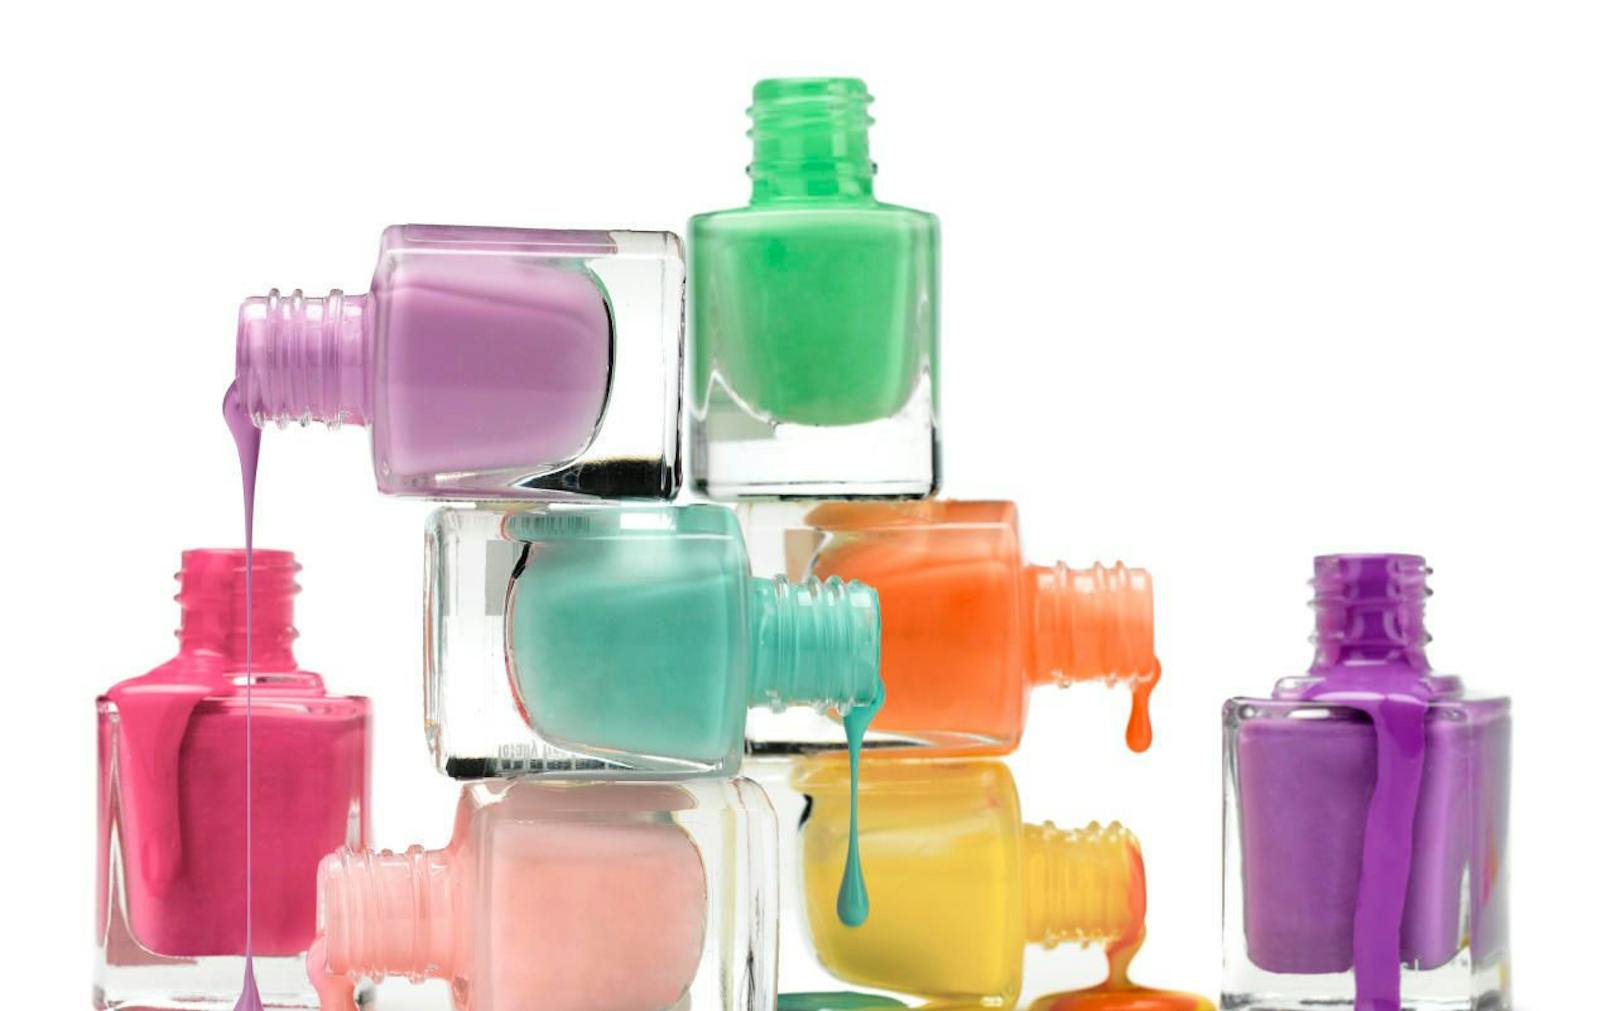 Dripping nail polish in several colors